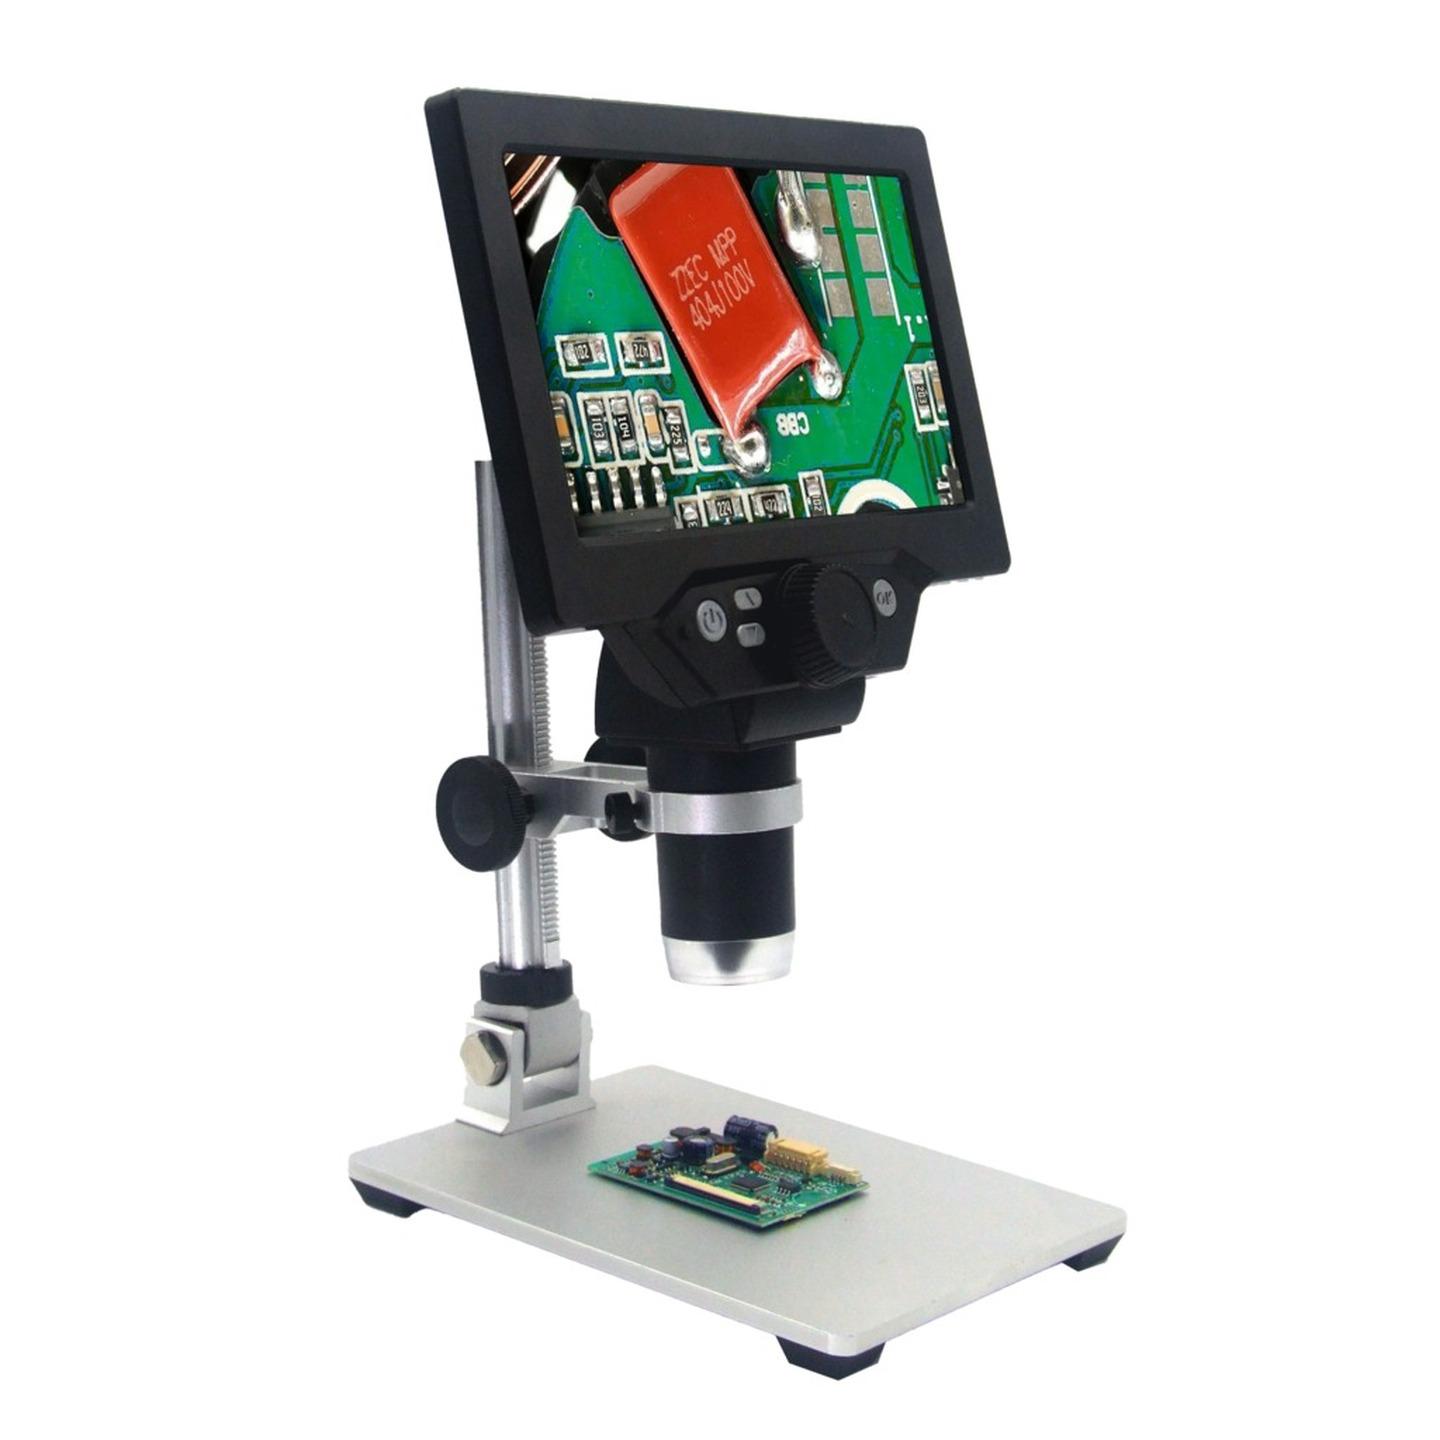 1080P Digital Microscope with 7 Inch HD Screen